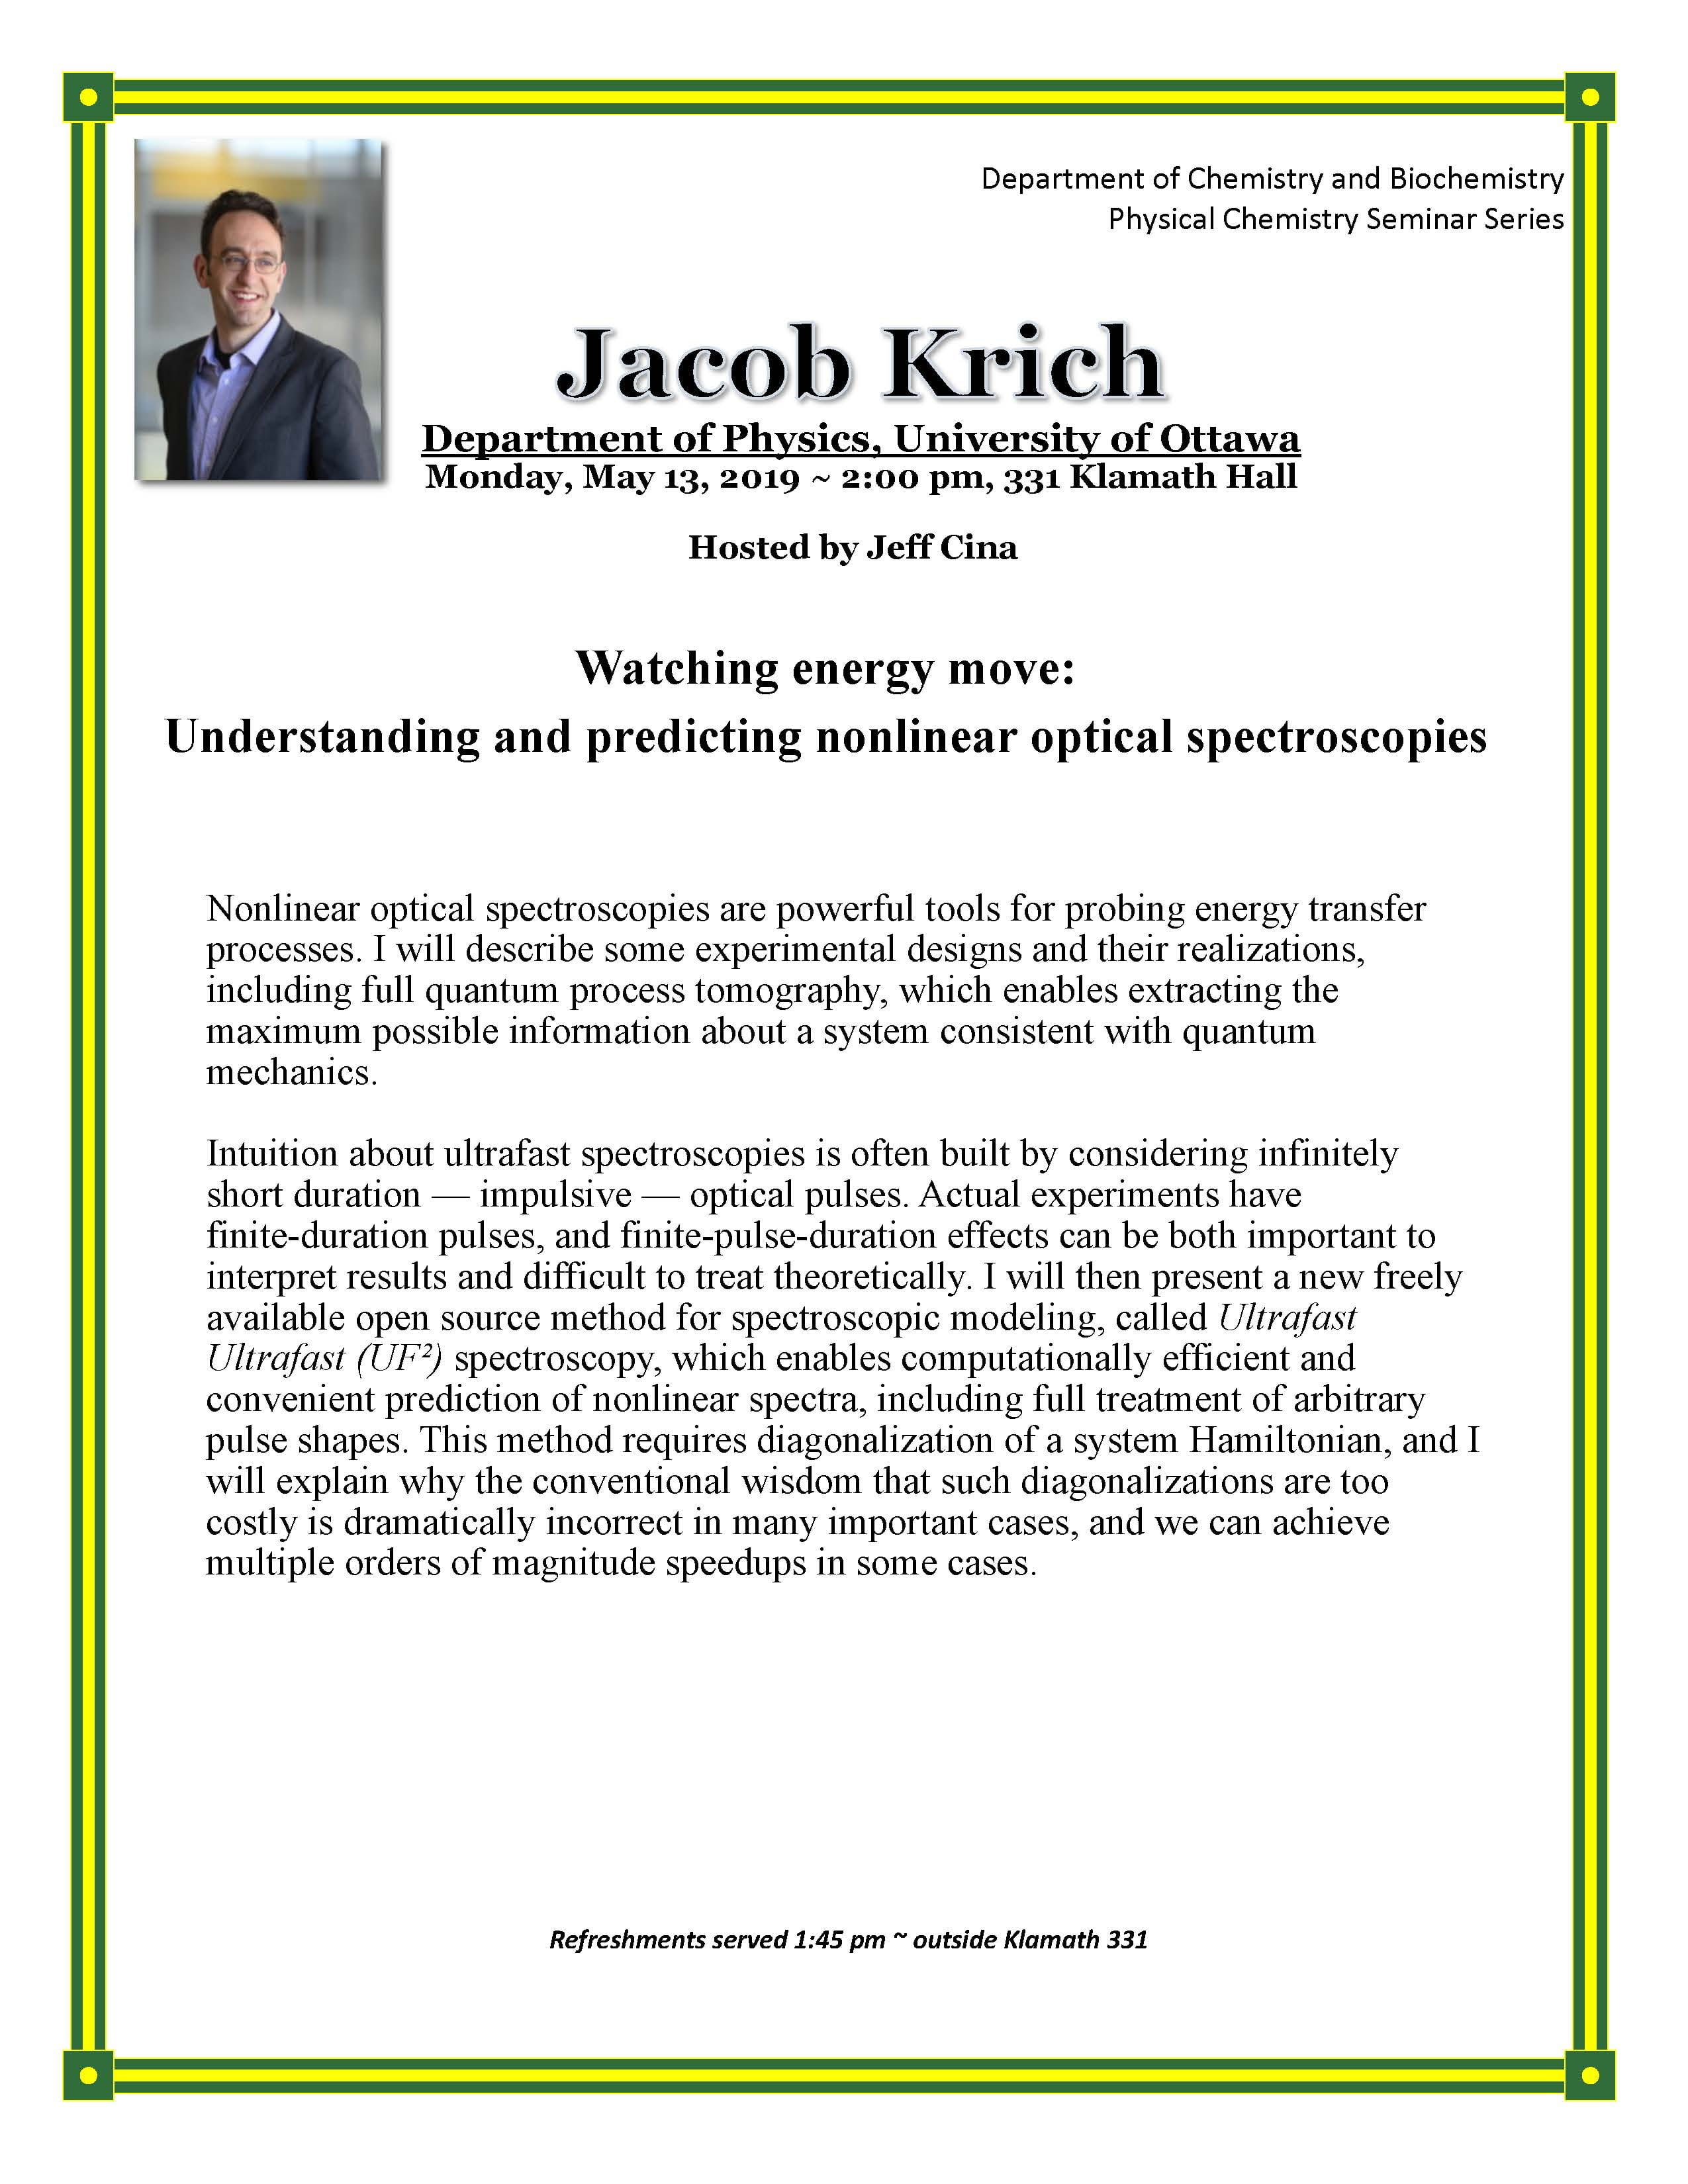 Jacob Krich - P-Chem seminar